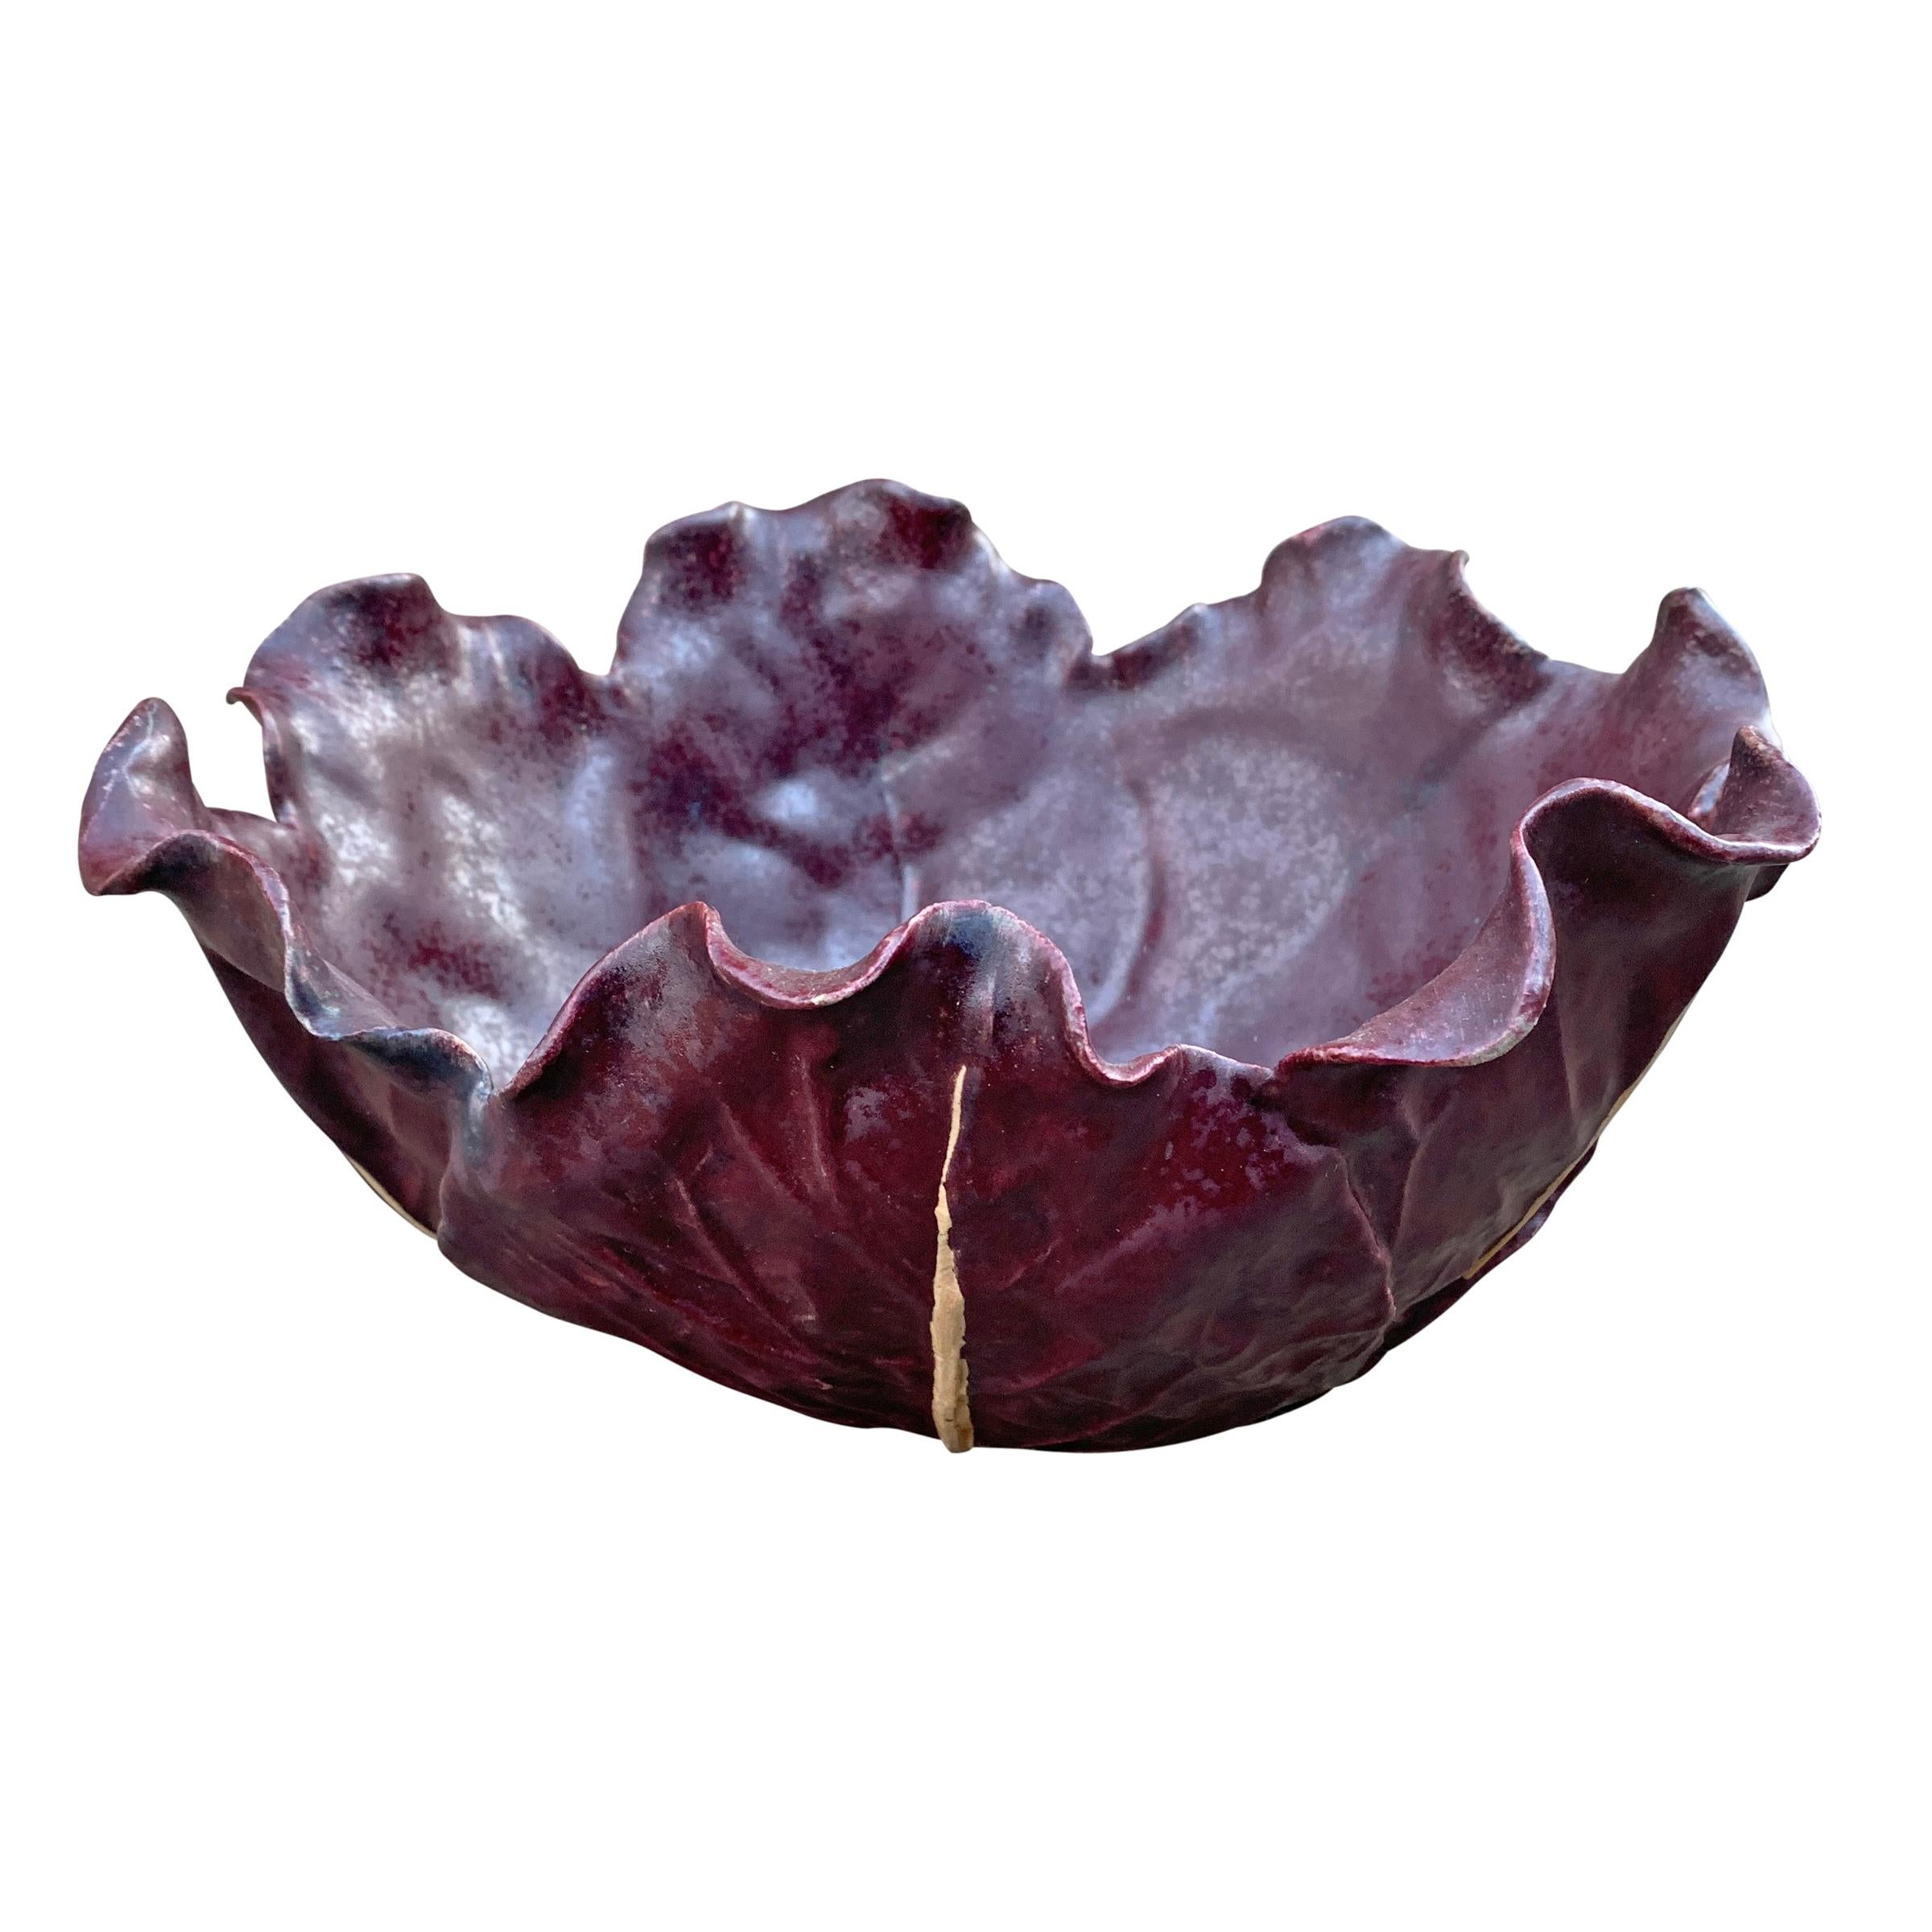 Rustic Vintage Hand-Built Ceramic Red Cabbage Bowl